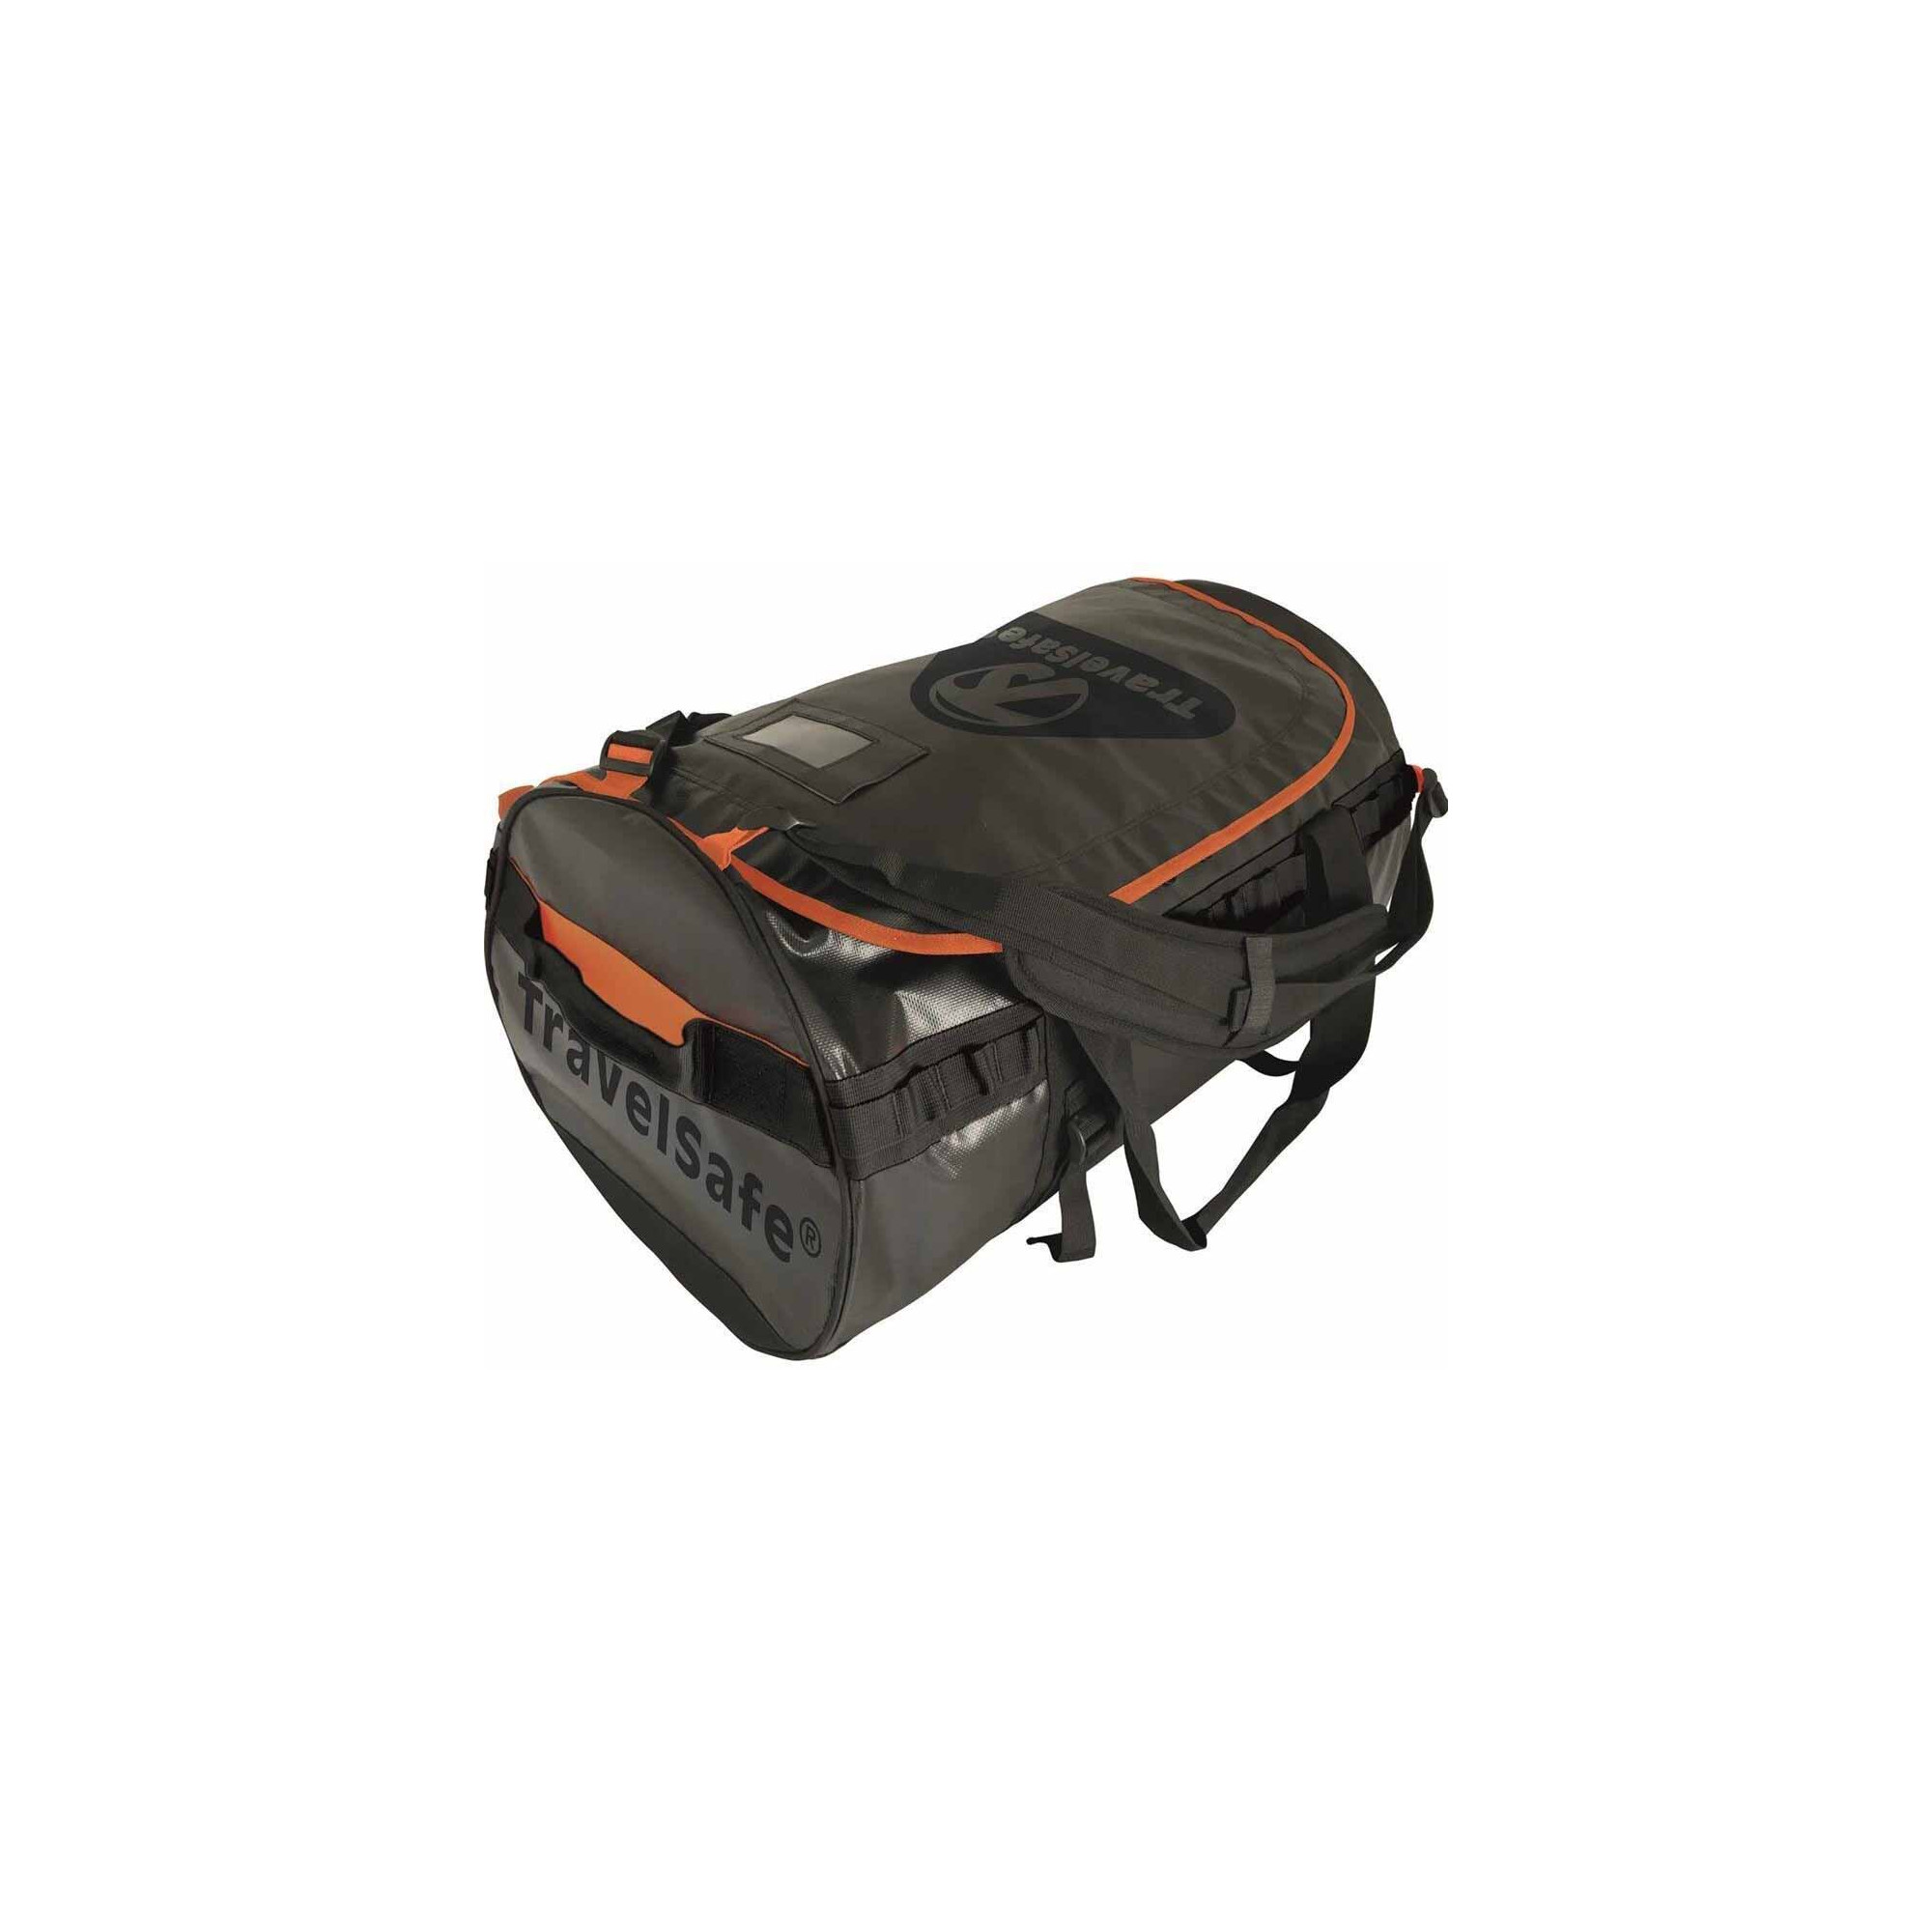 Duffle Bag Nepal XL 110L TravelSafe, travel bag 8718685012561